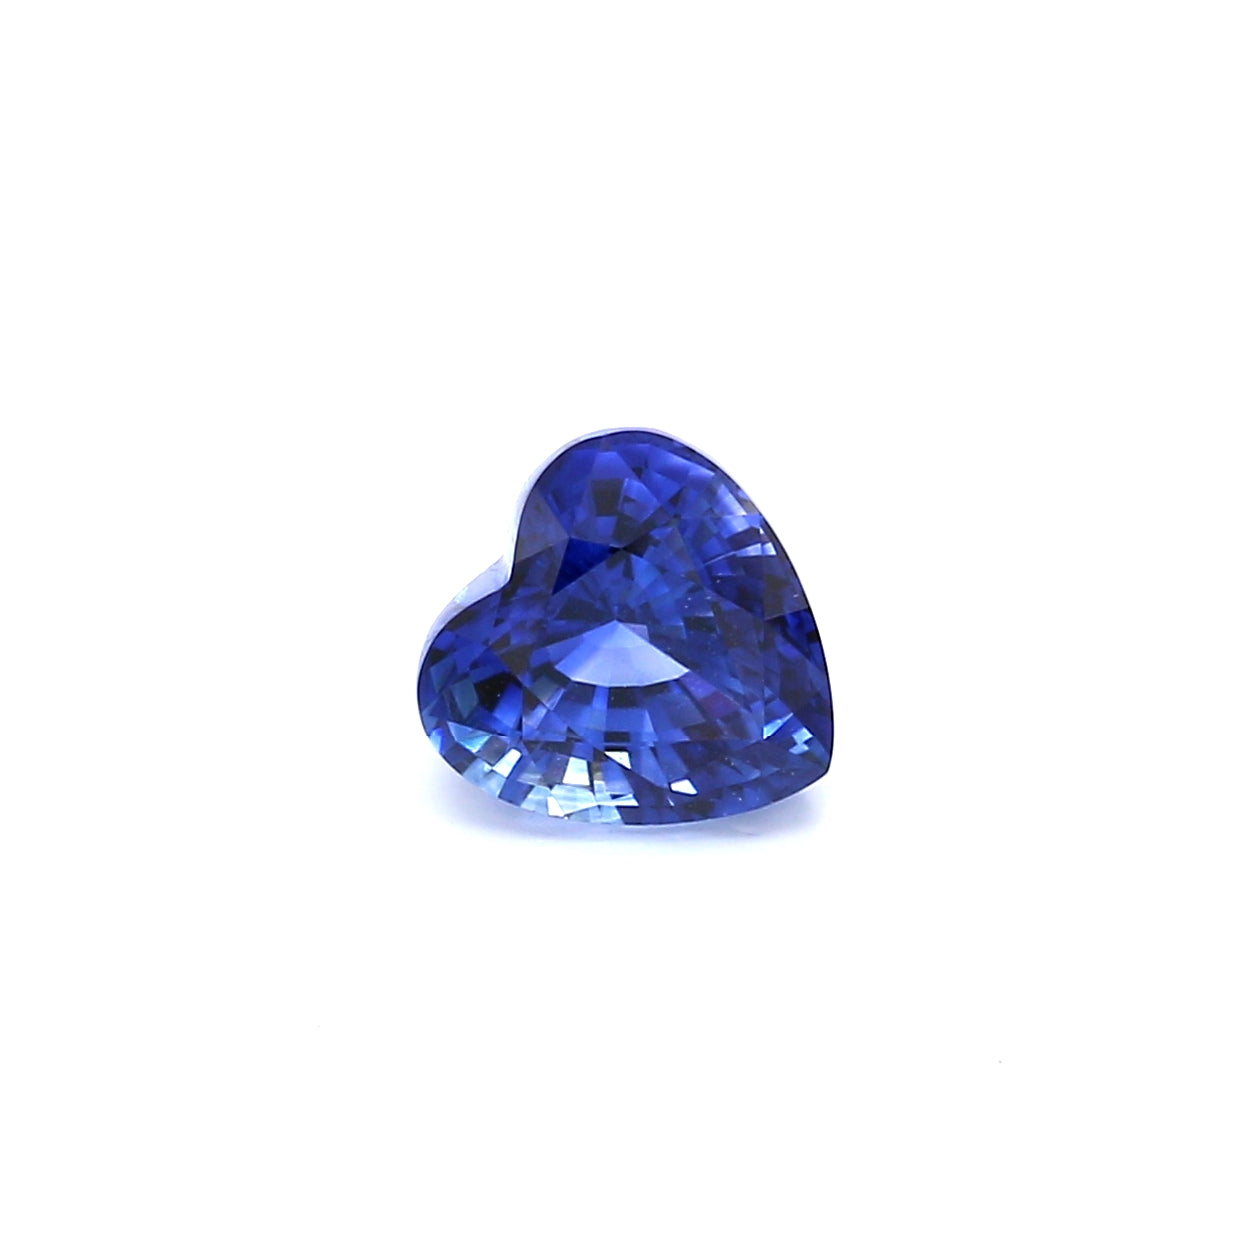 1.78ct Heart Shape Sapphire, Heated, Sri Lanka - 6.90 x 6.85 x 4.79mm